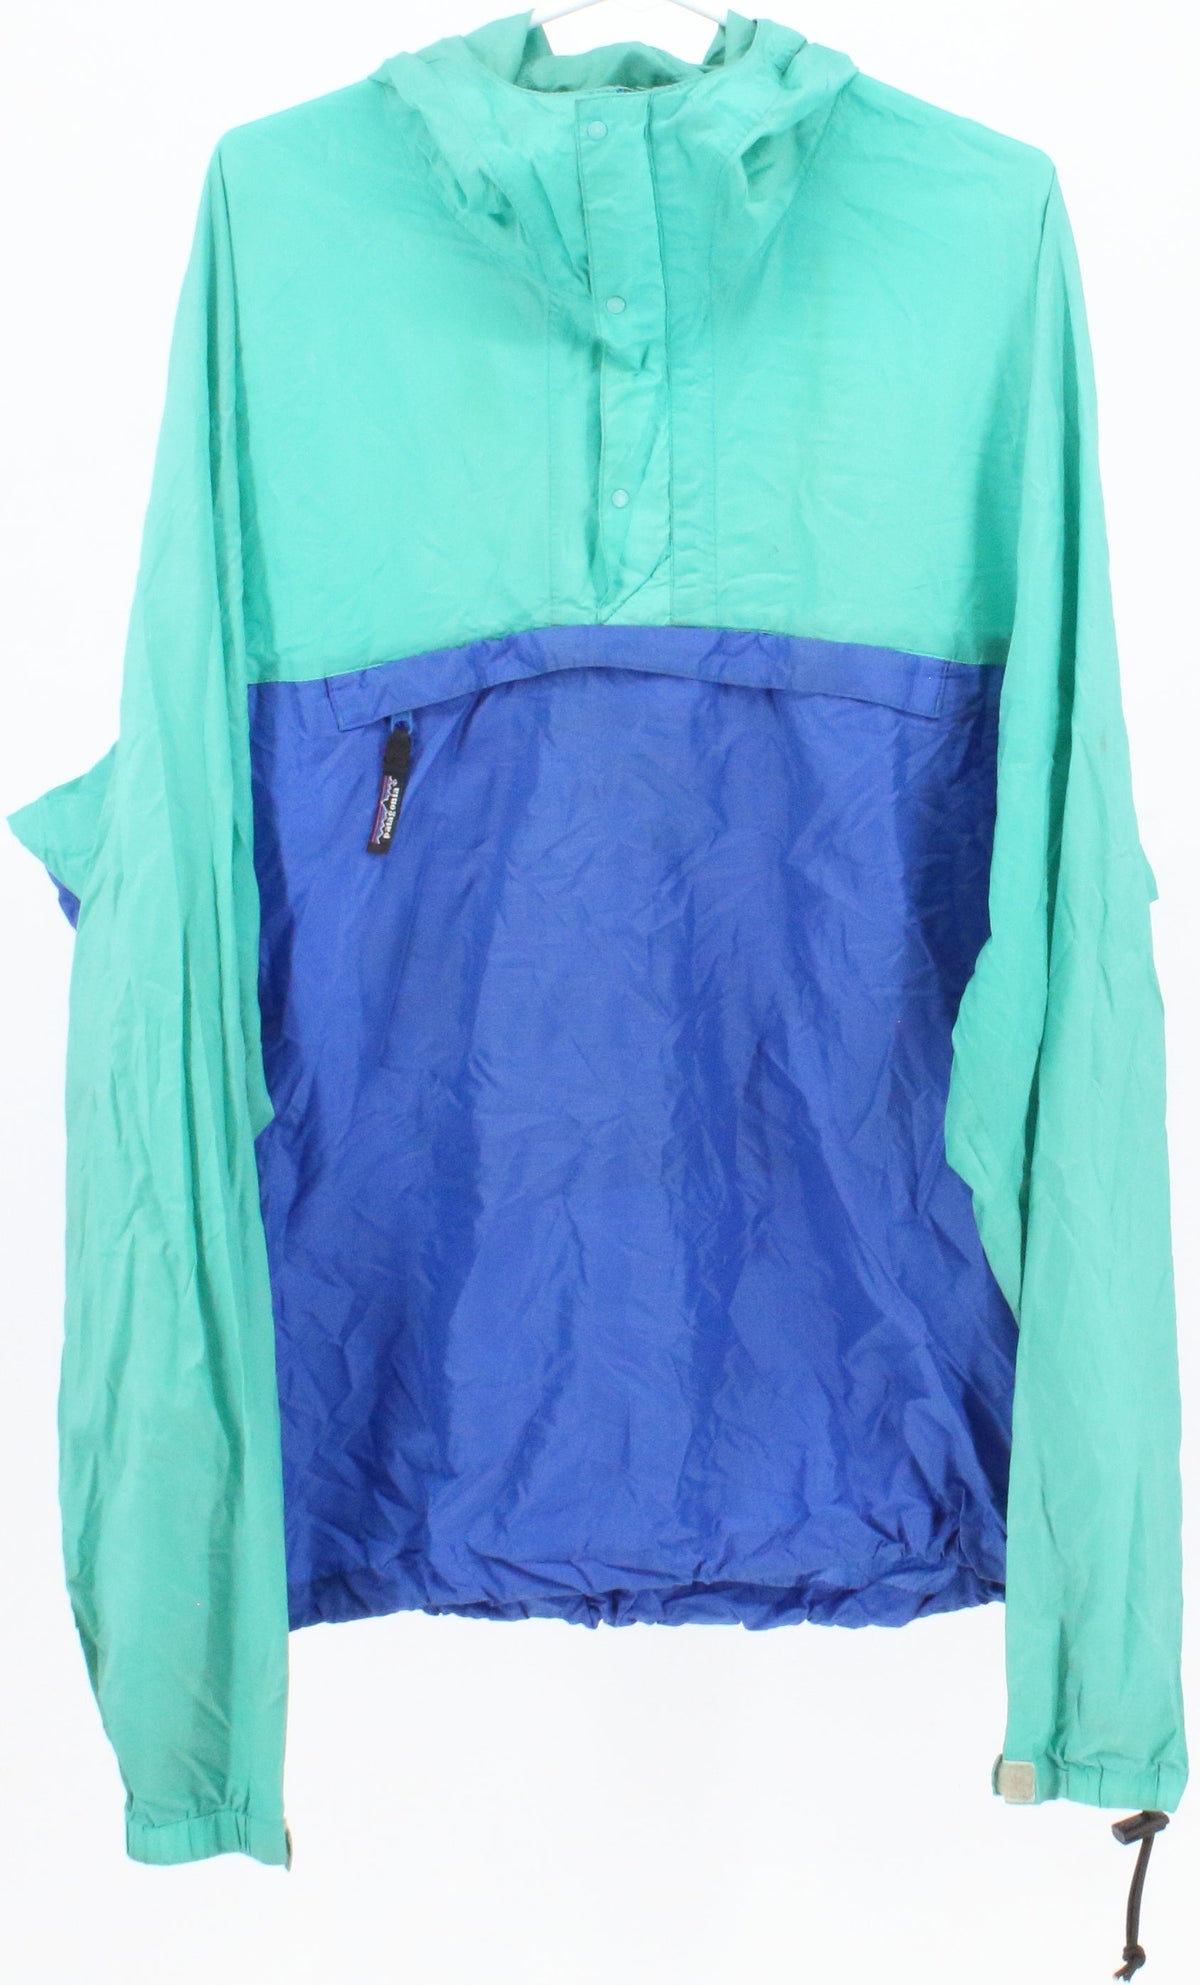 Patagonia Green and Blue Nylon Jacket